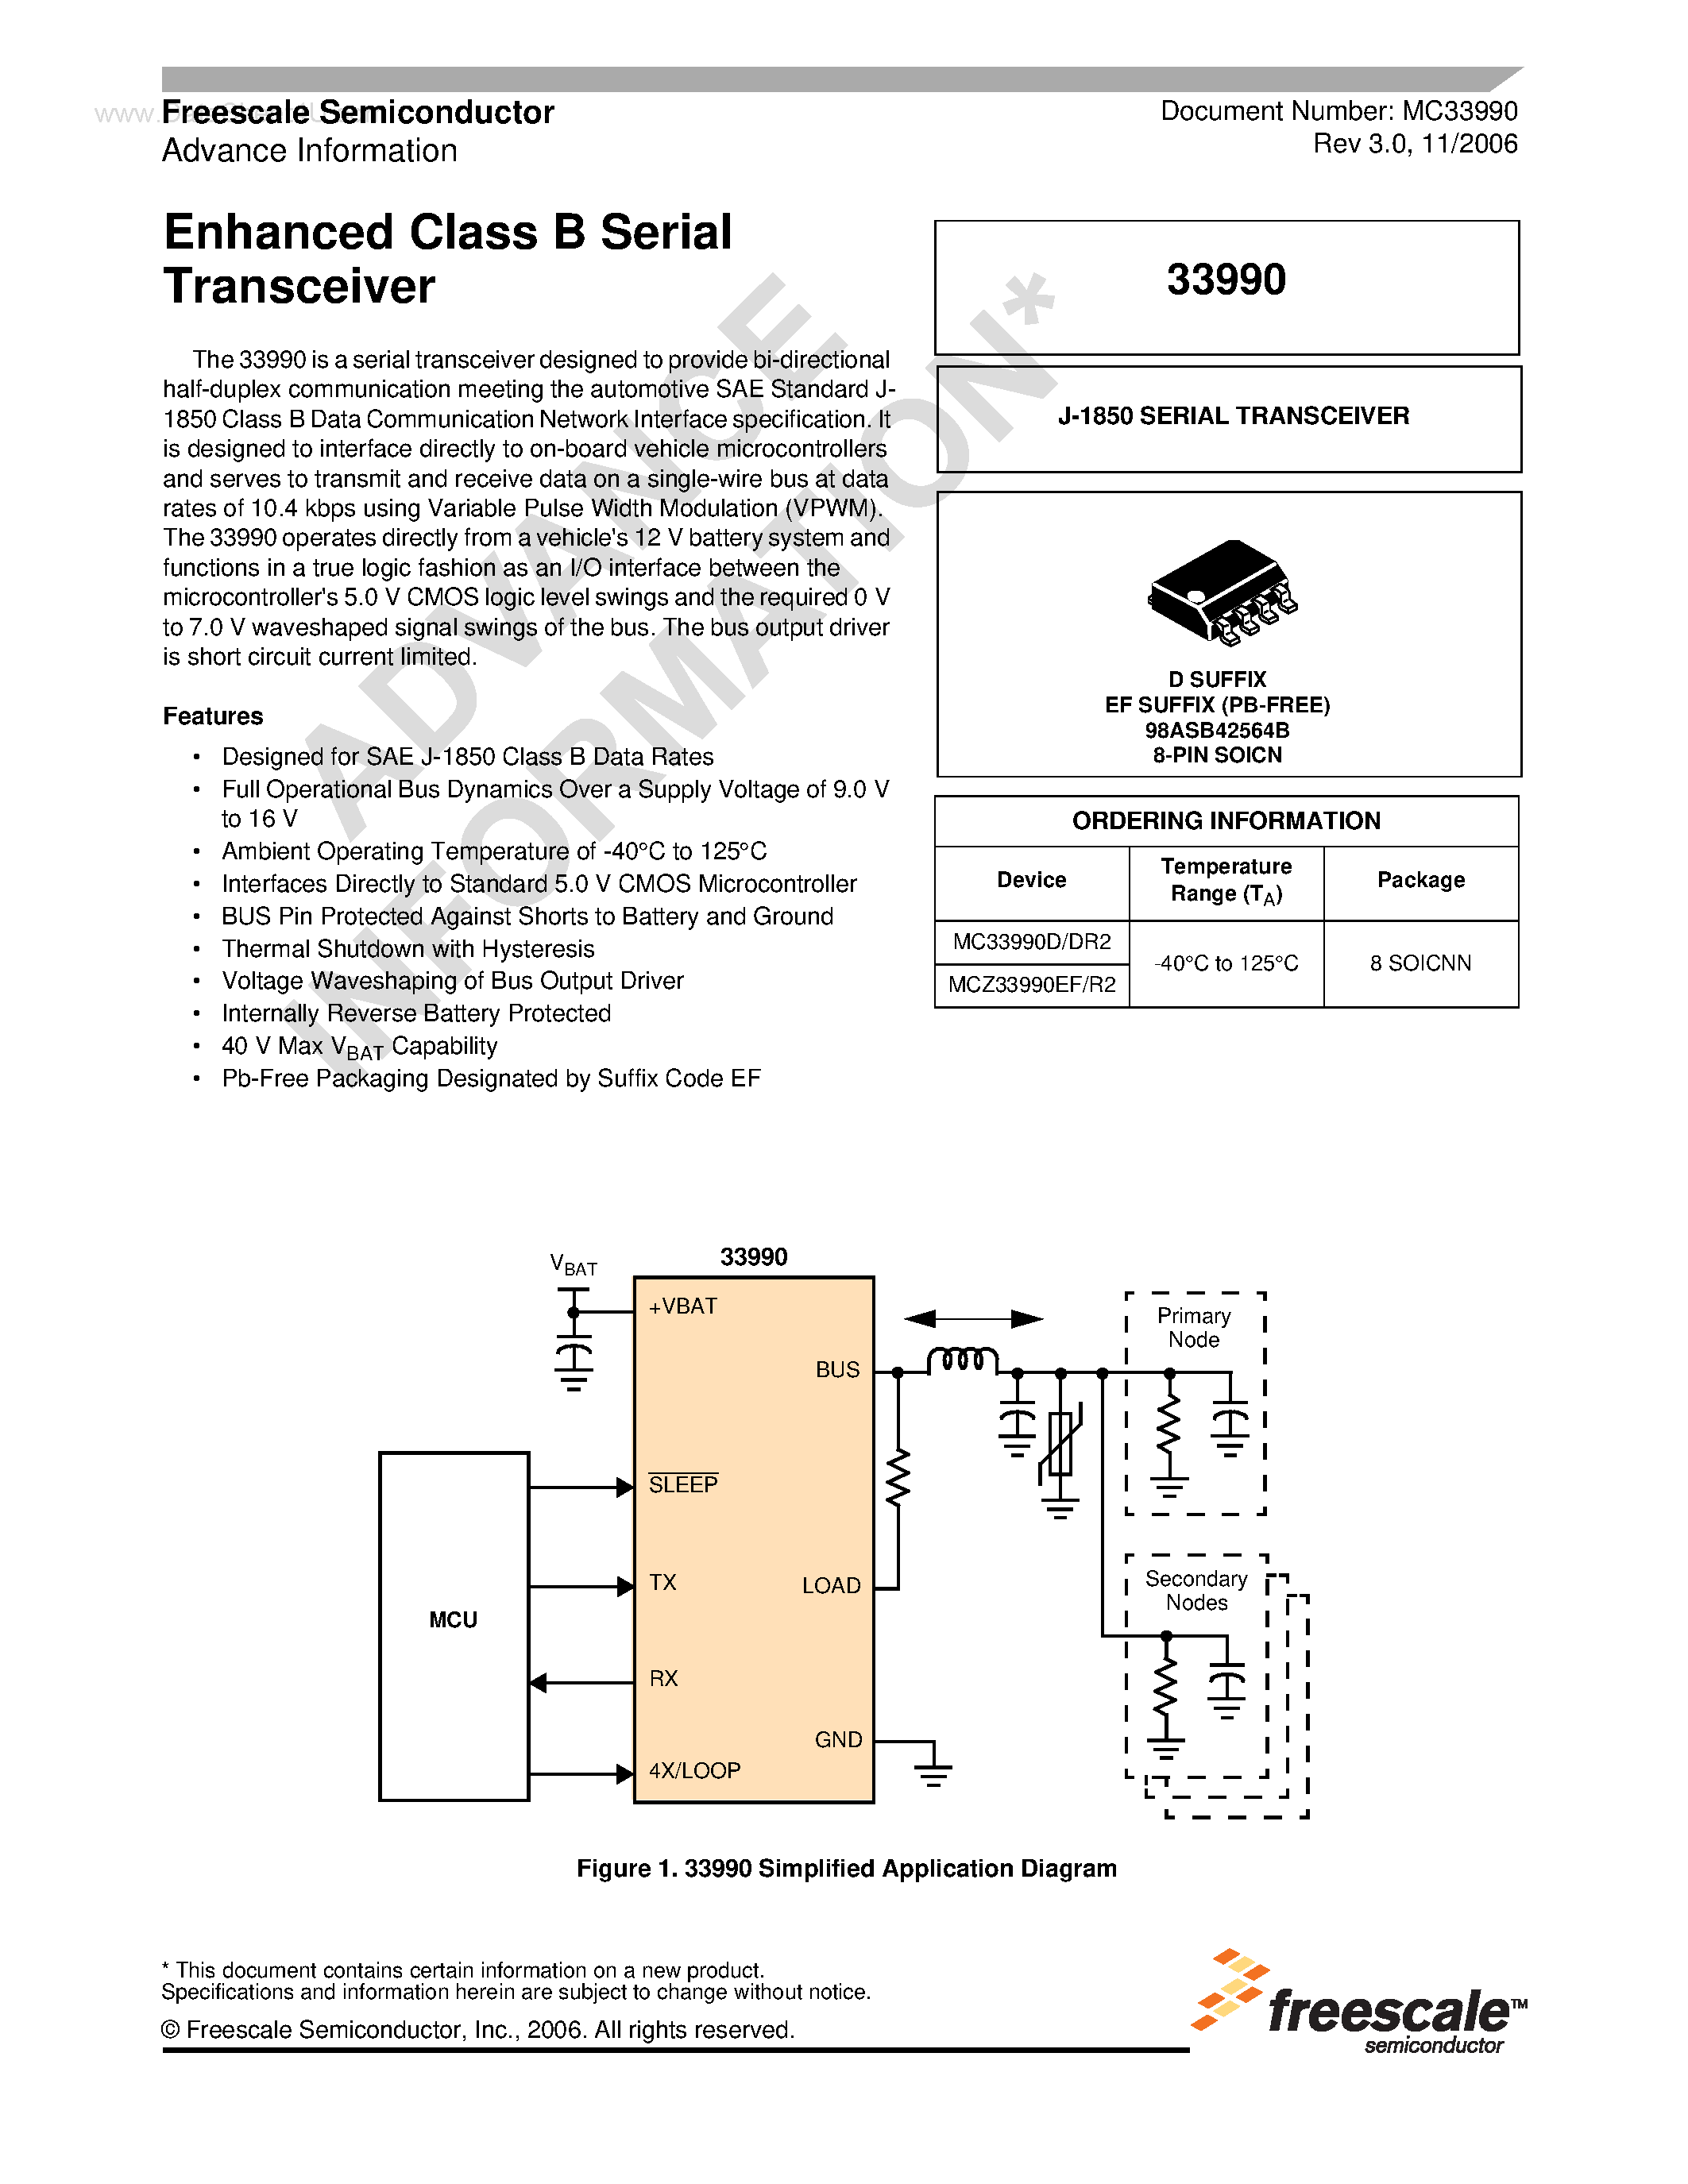 Даташит MC33990 - Enhanced Class B Serial Transceiver страница 1